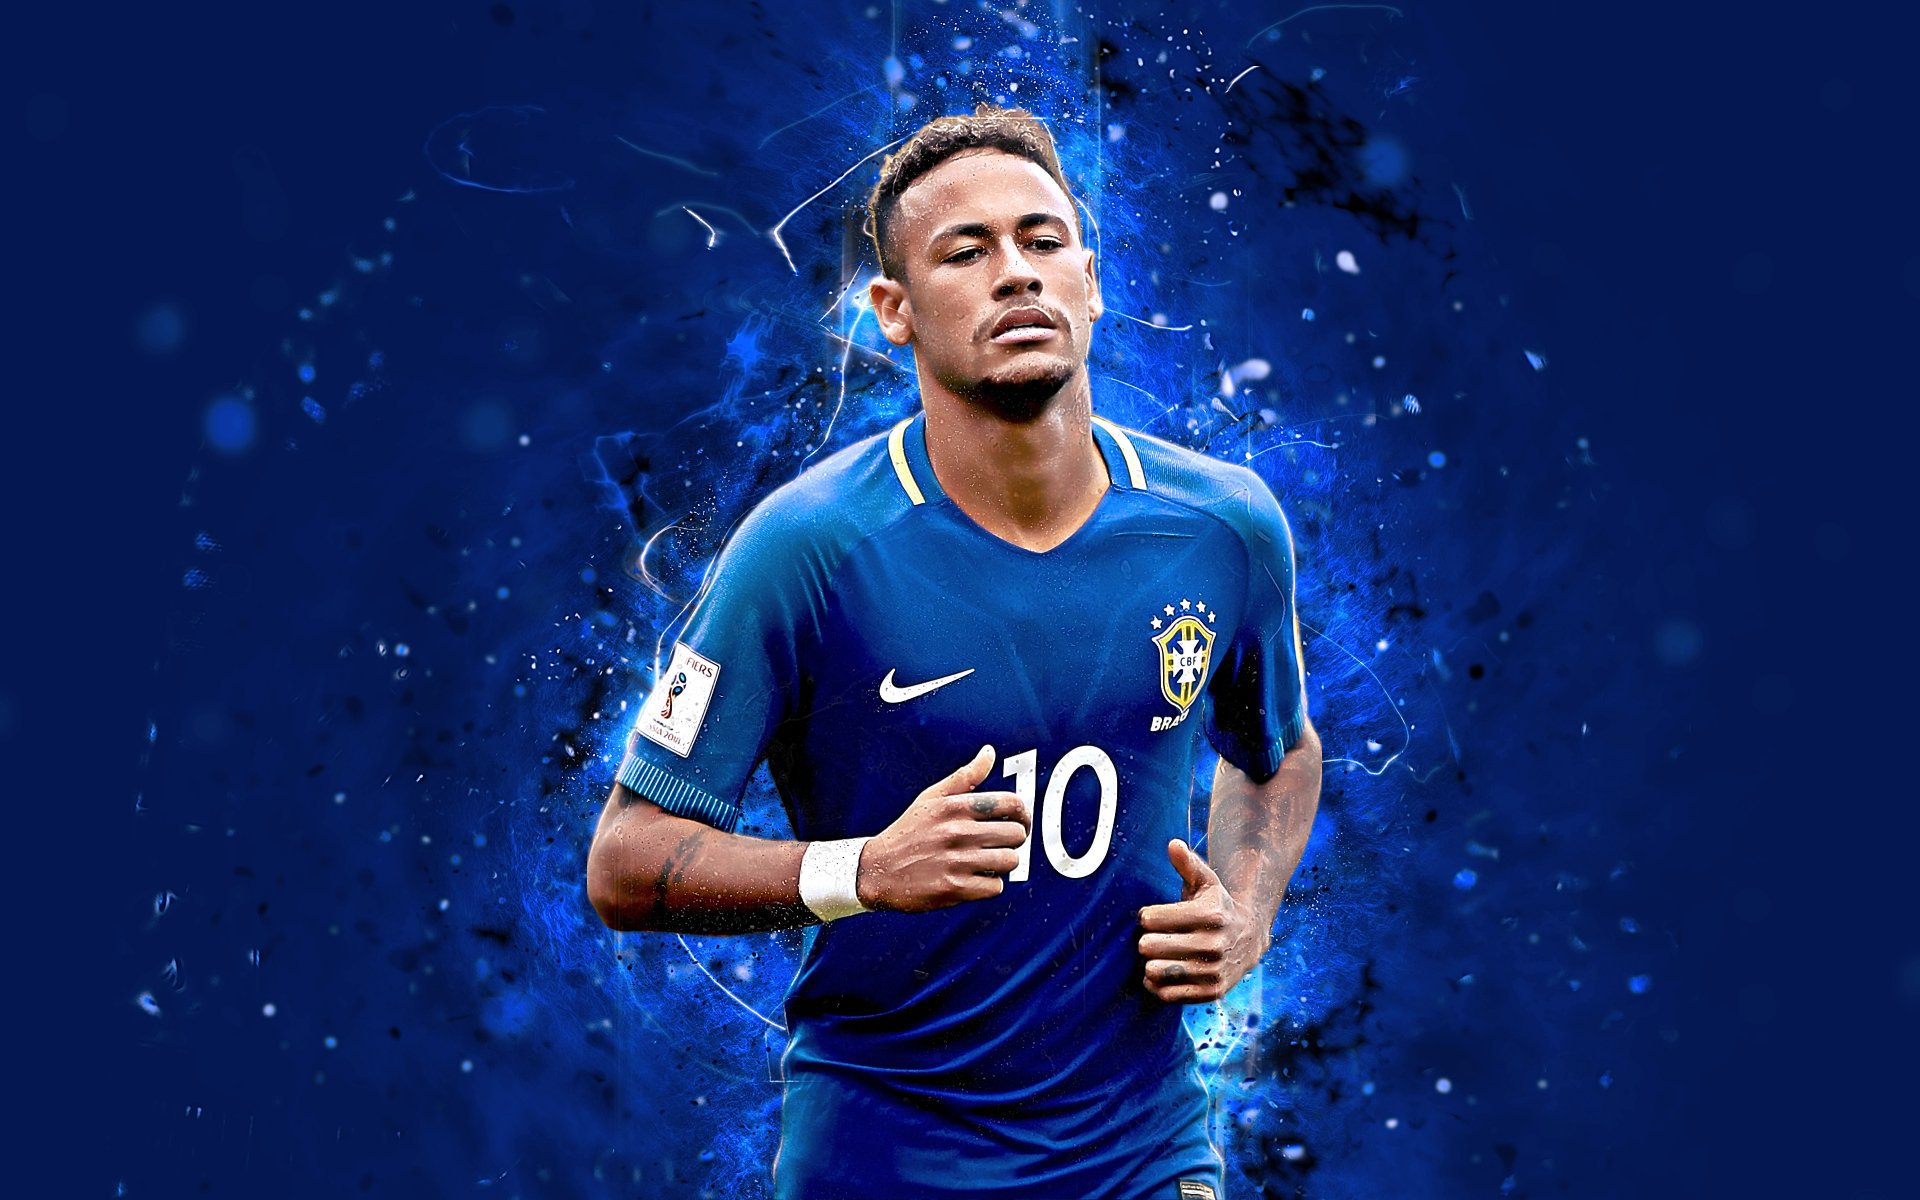 Ảnh Neymar 4K  Hình nền Neymar ngầu đẹp 2023